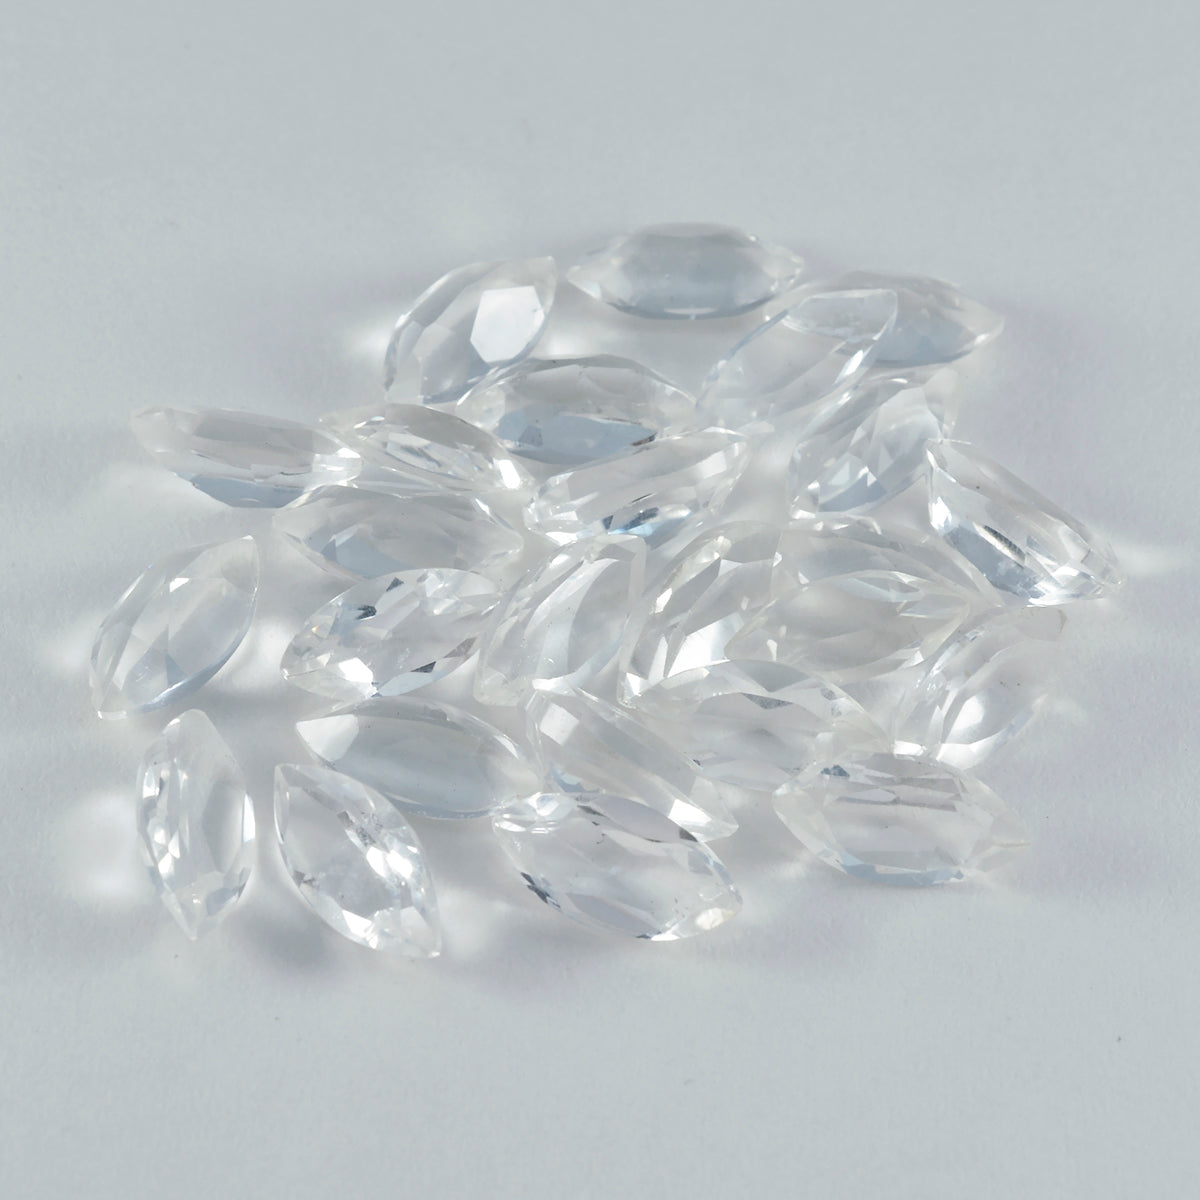 Riyogems 1PC White Crystal Quartz Faceted 5x10 mm Marquise Shape AAA Quality Gem